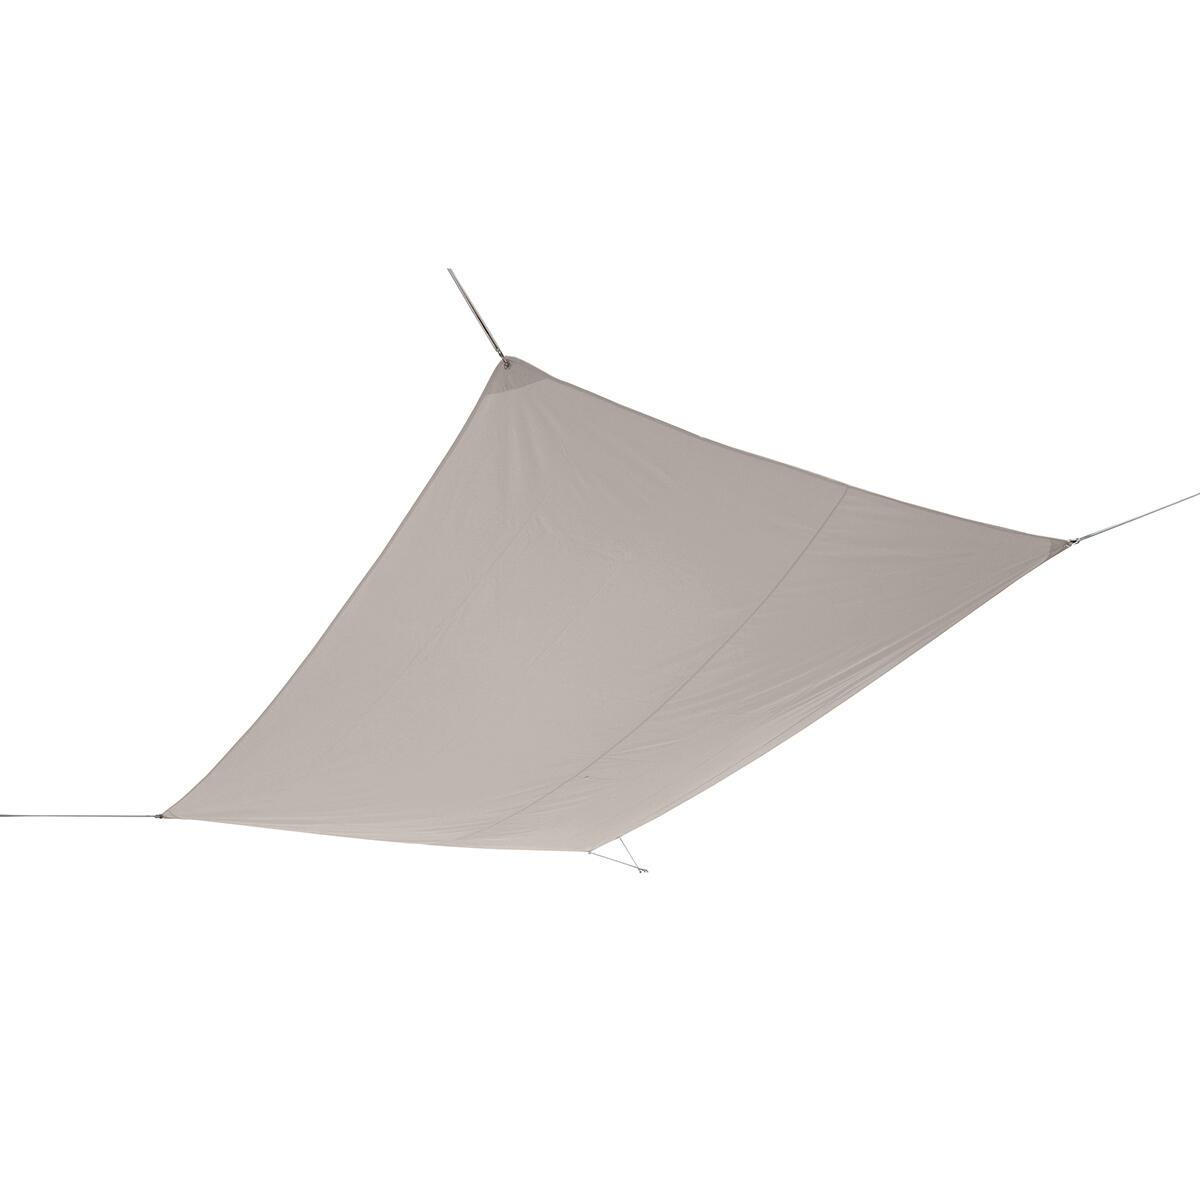 Vela ombreggiante Hegoa rettangolare tortora 300 x 400 cm - 3